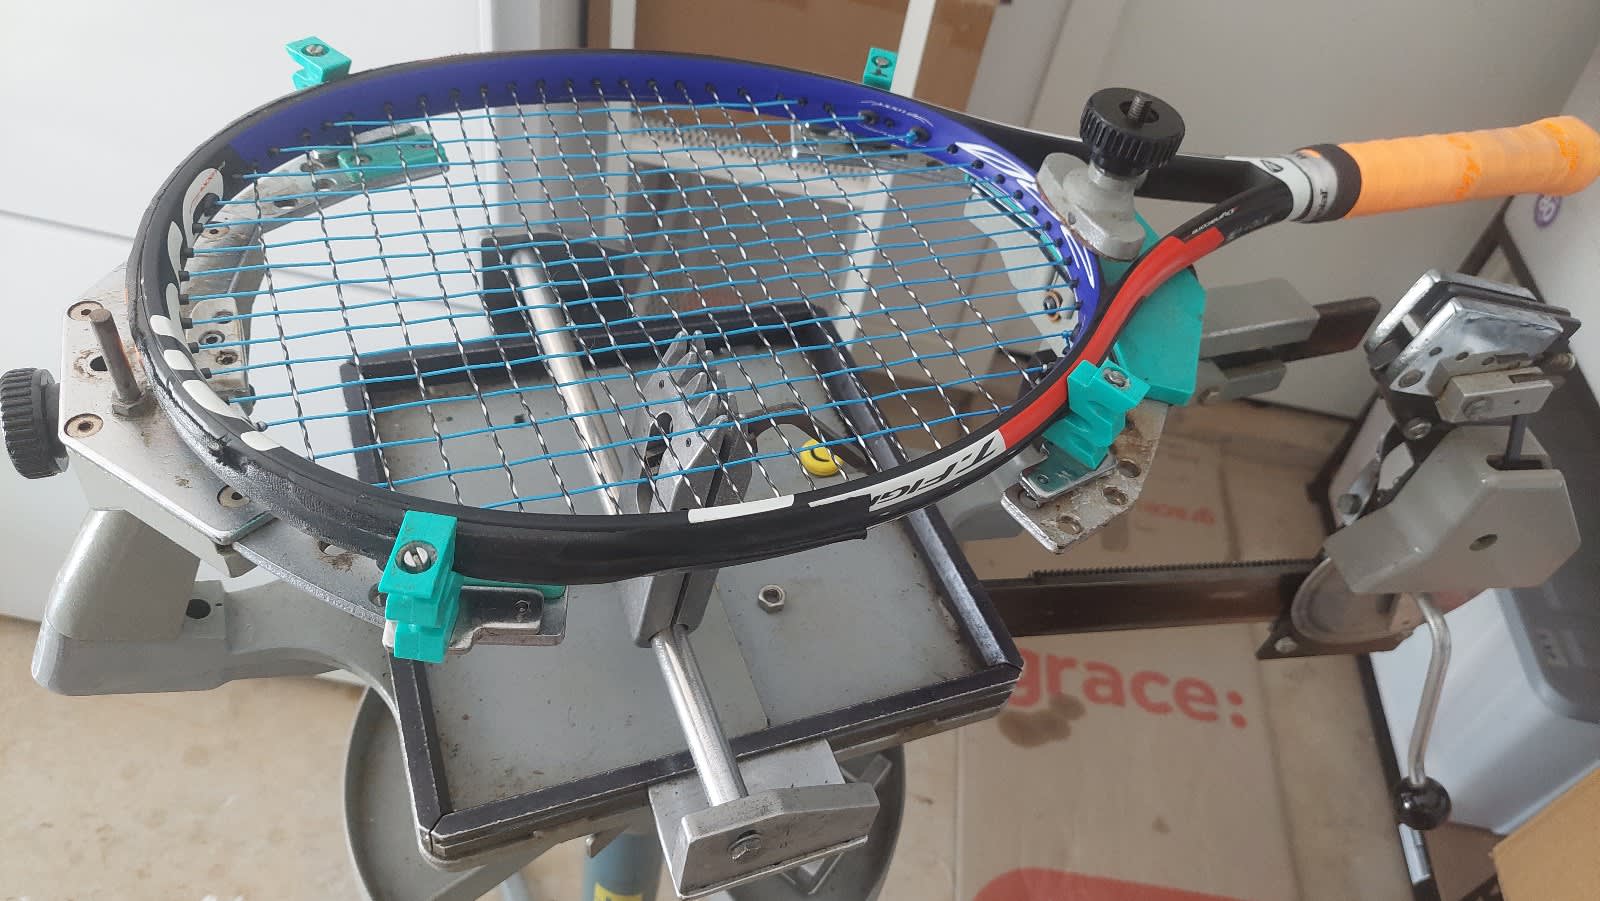 Stringing badminton racket with DIY string machine 2nd unit 